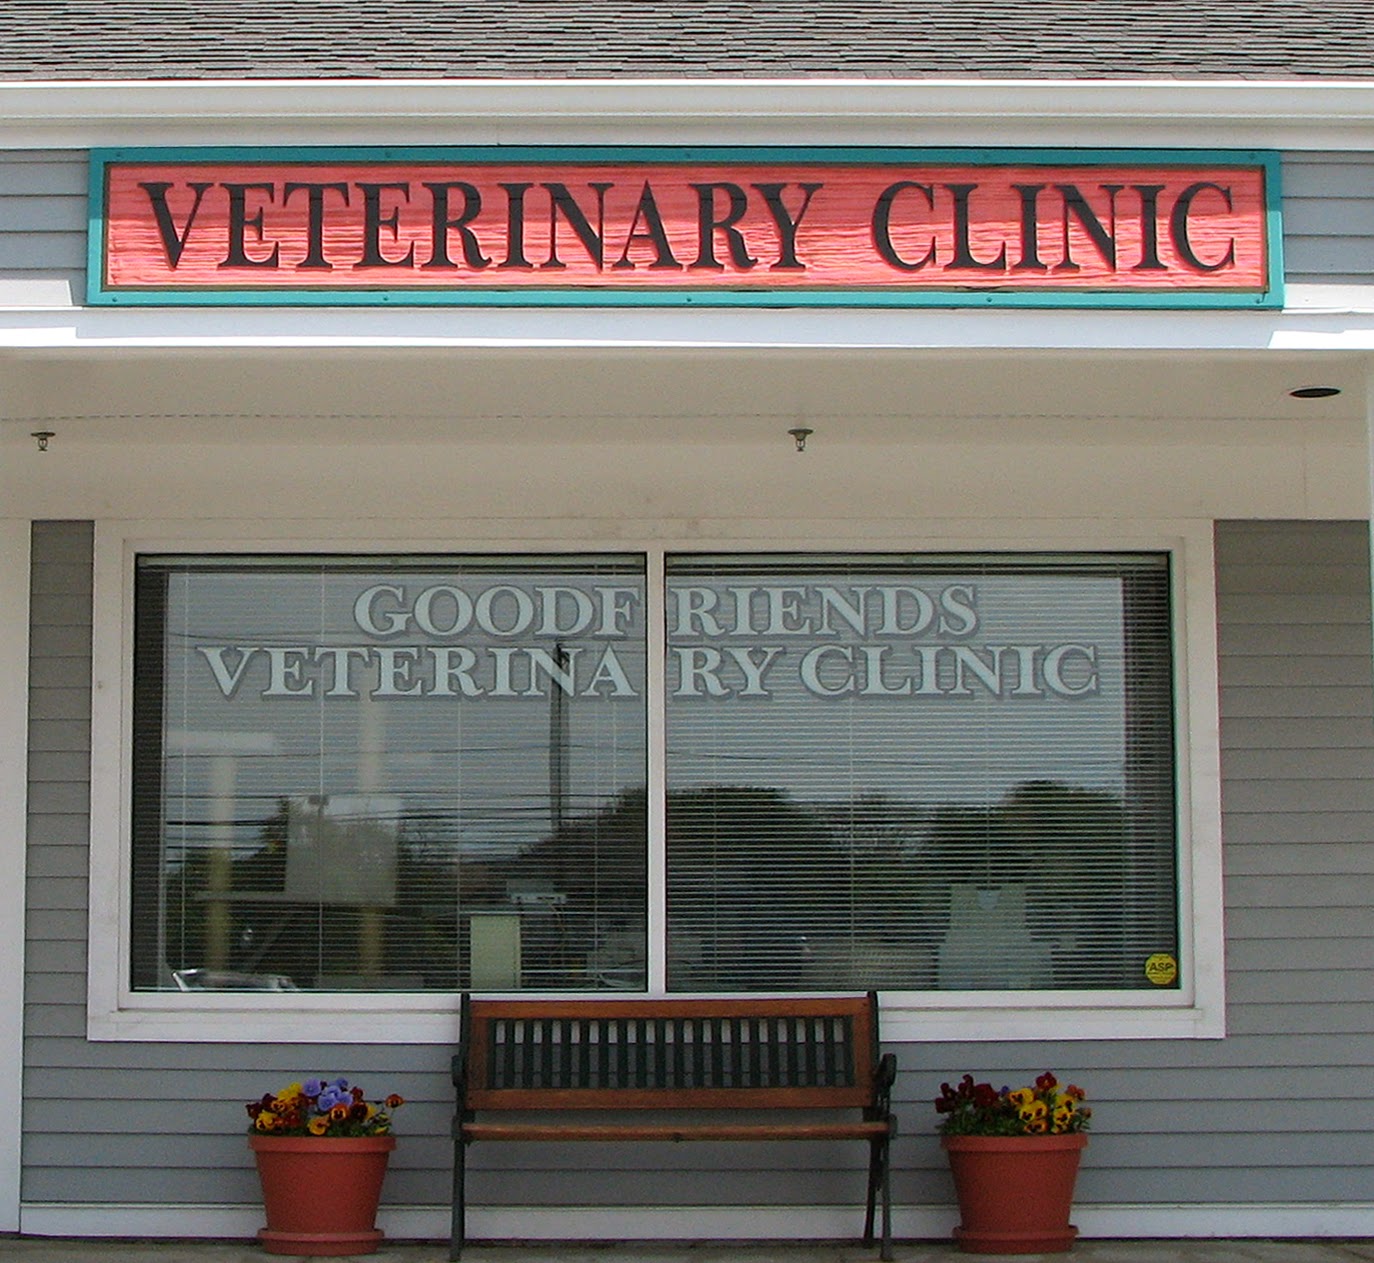 Goodfriends Veterinary Clinic